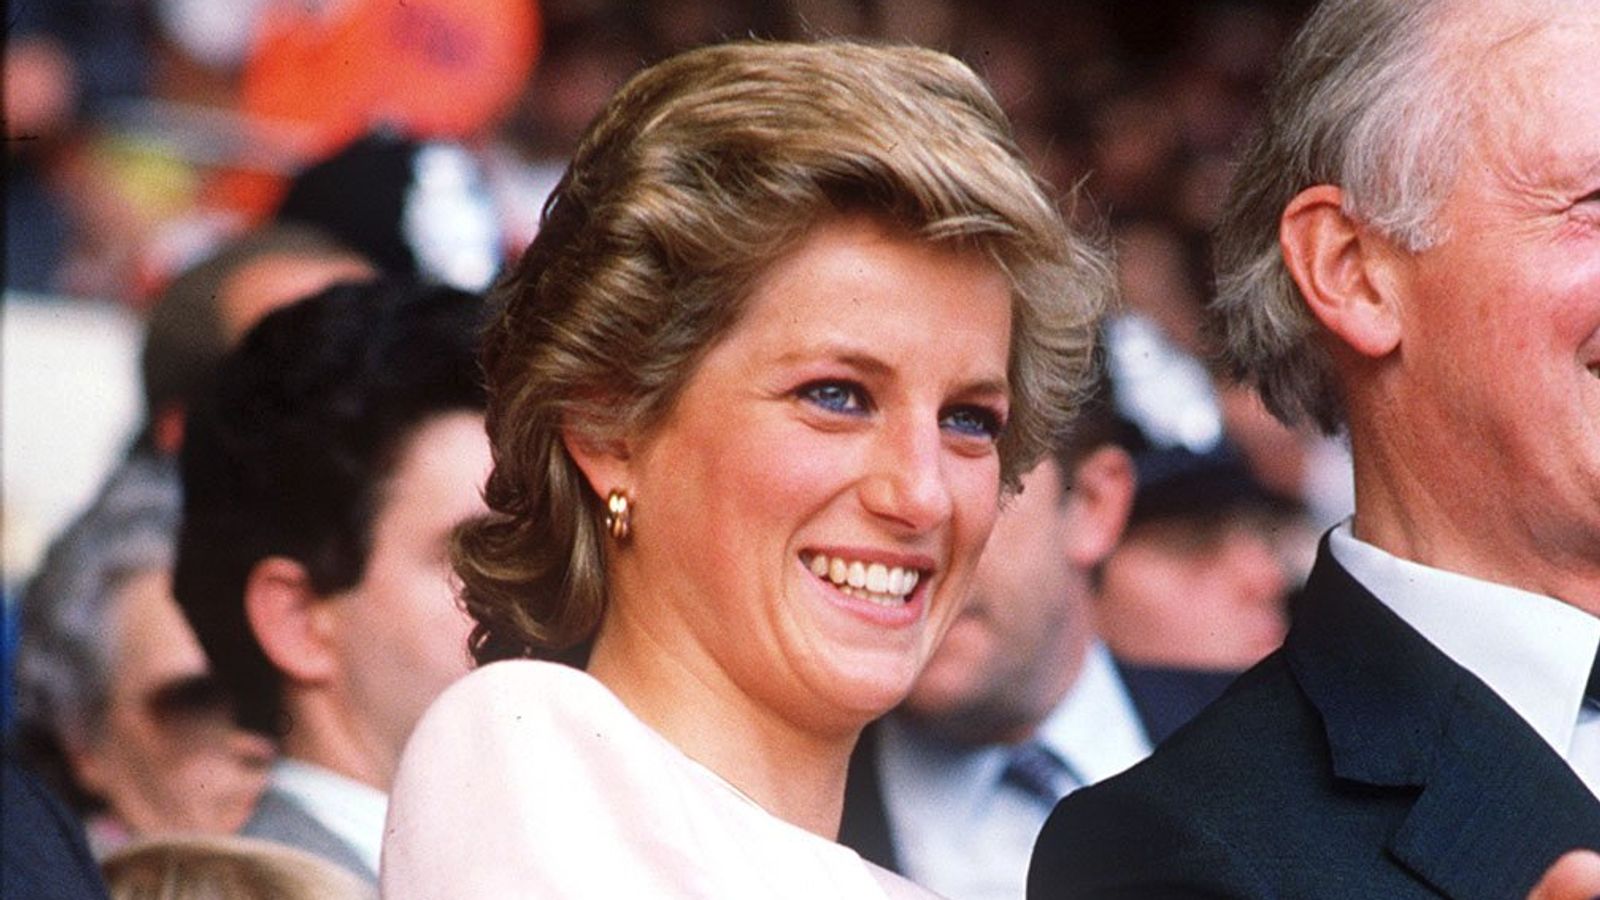 Princess Diana’s engagement portrait shirt may fetch £79,000